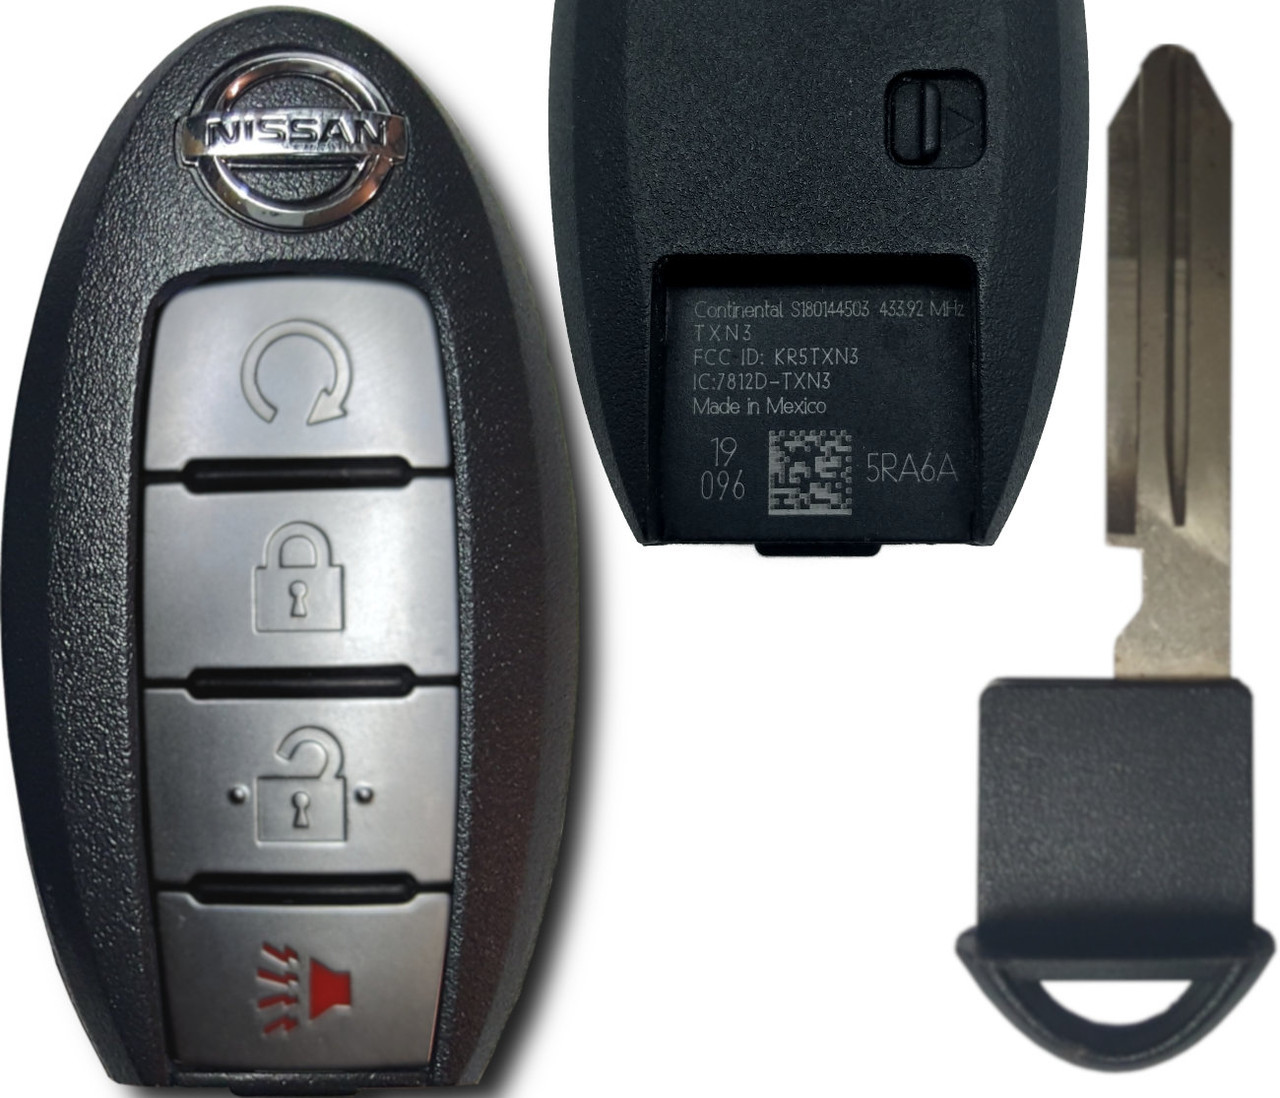 Nissan Rouge or Kicks TXN3 285E35RA6A Remote Key Fob S180144503